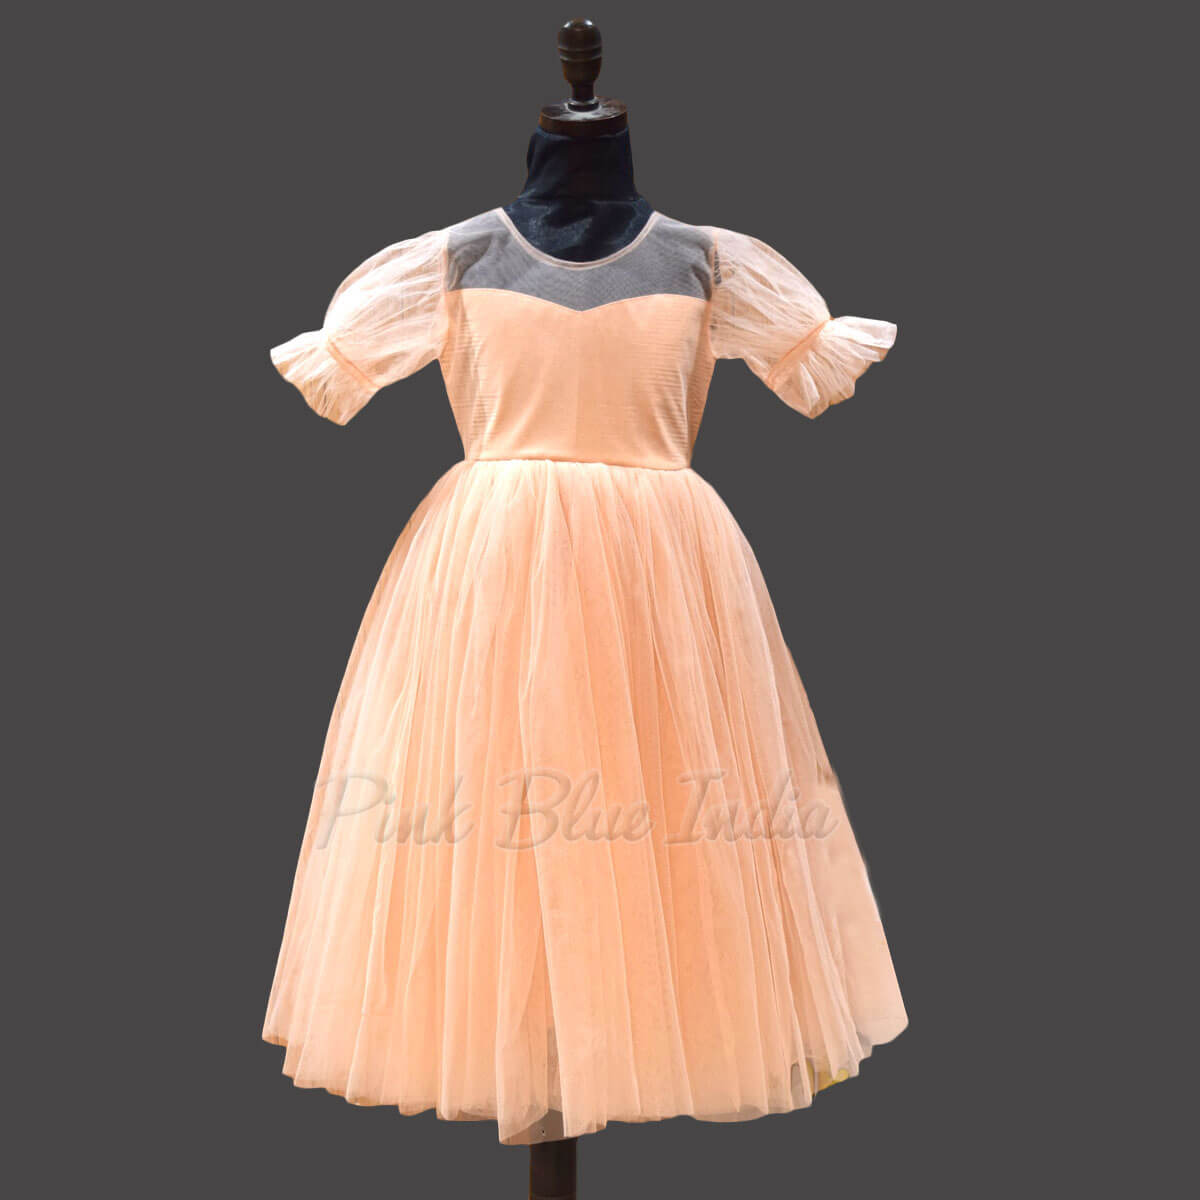 Peach Balloon Sleeve Dress Online